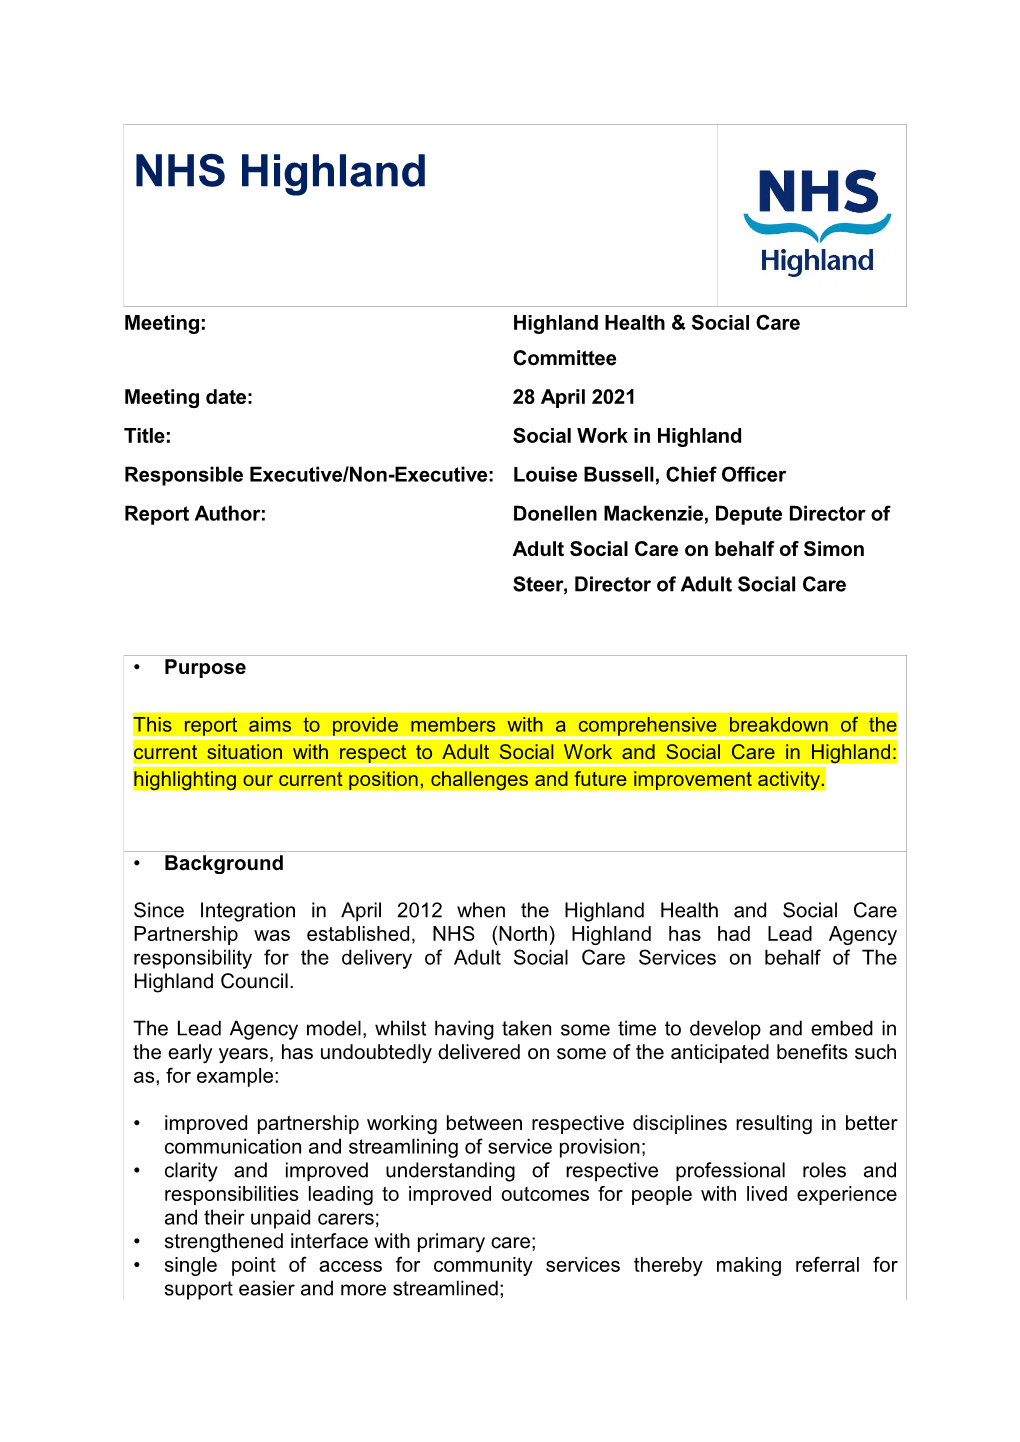 3.5 Social Work in NHS Highland